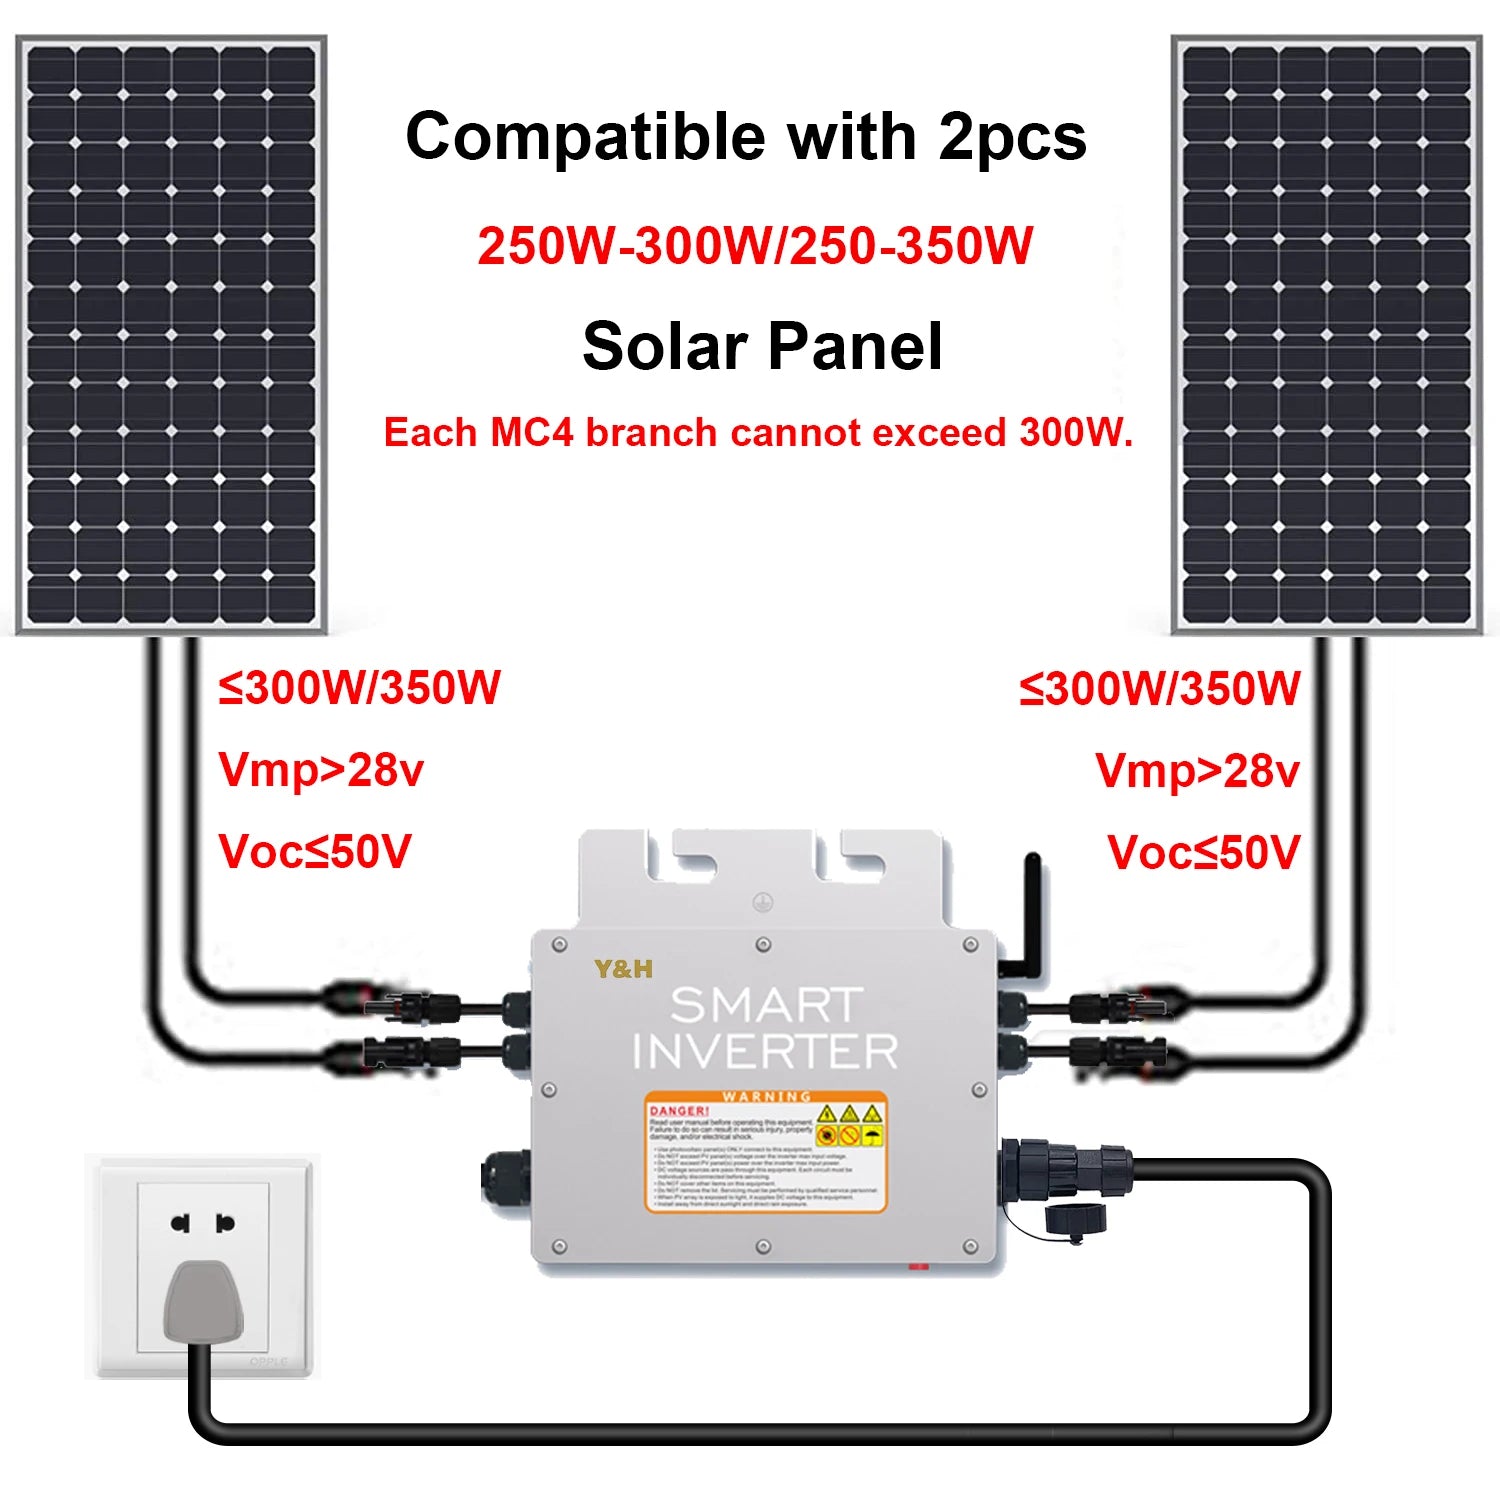 Inverter for ZPCS solar panels, handles up to 300W, ensures efficient energy conversion.